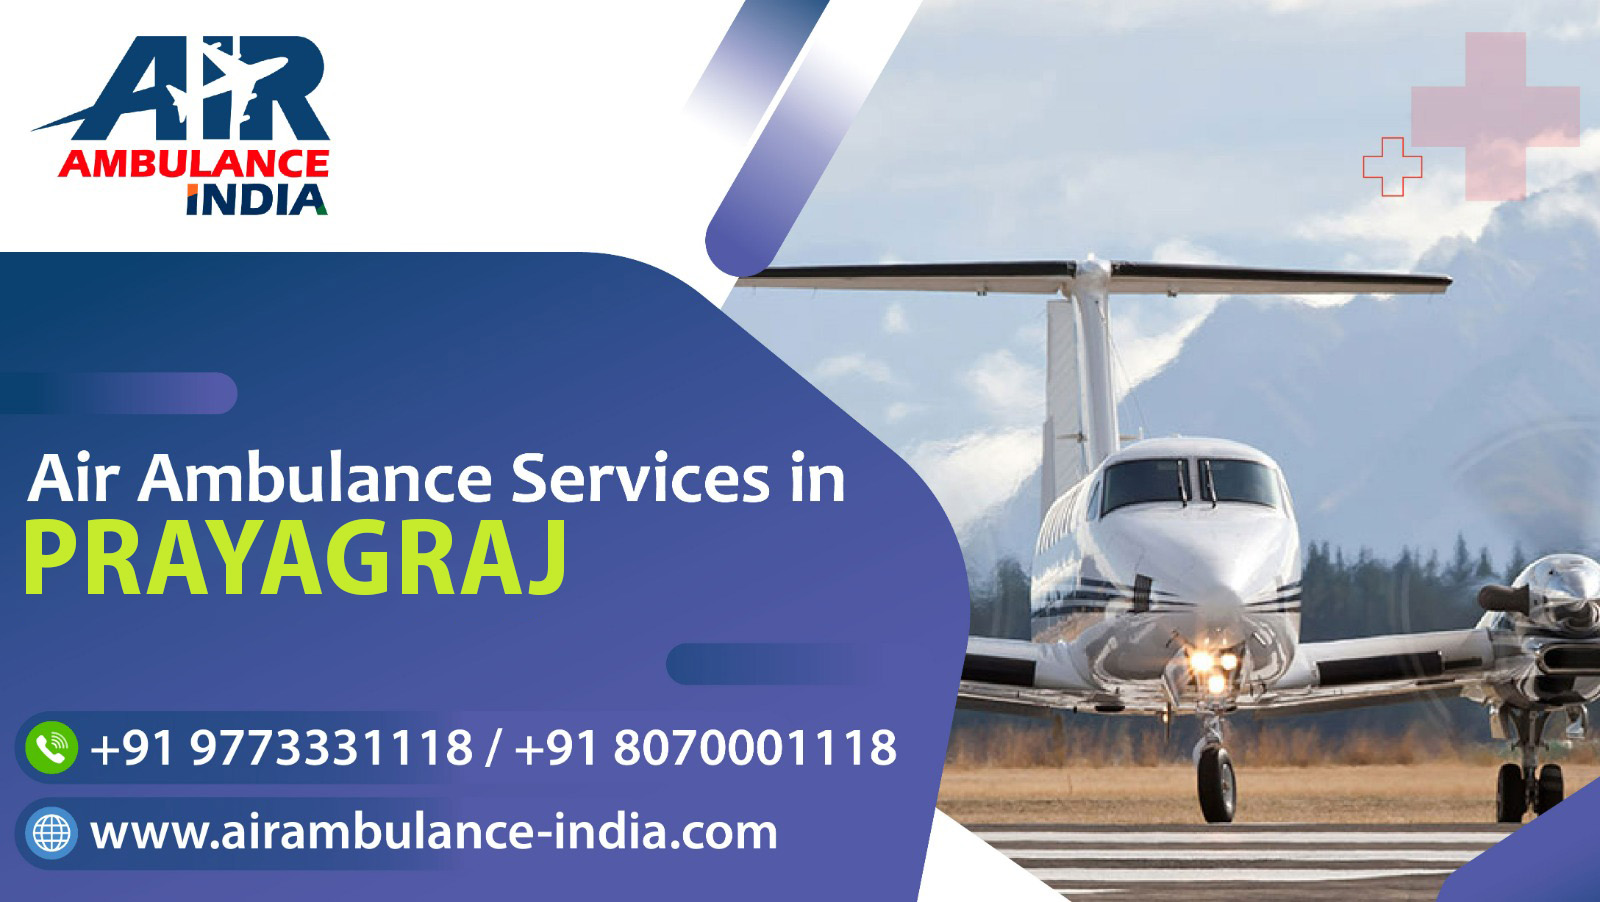 Air Ambulance Services in Prayagraj